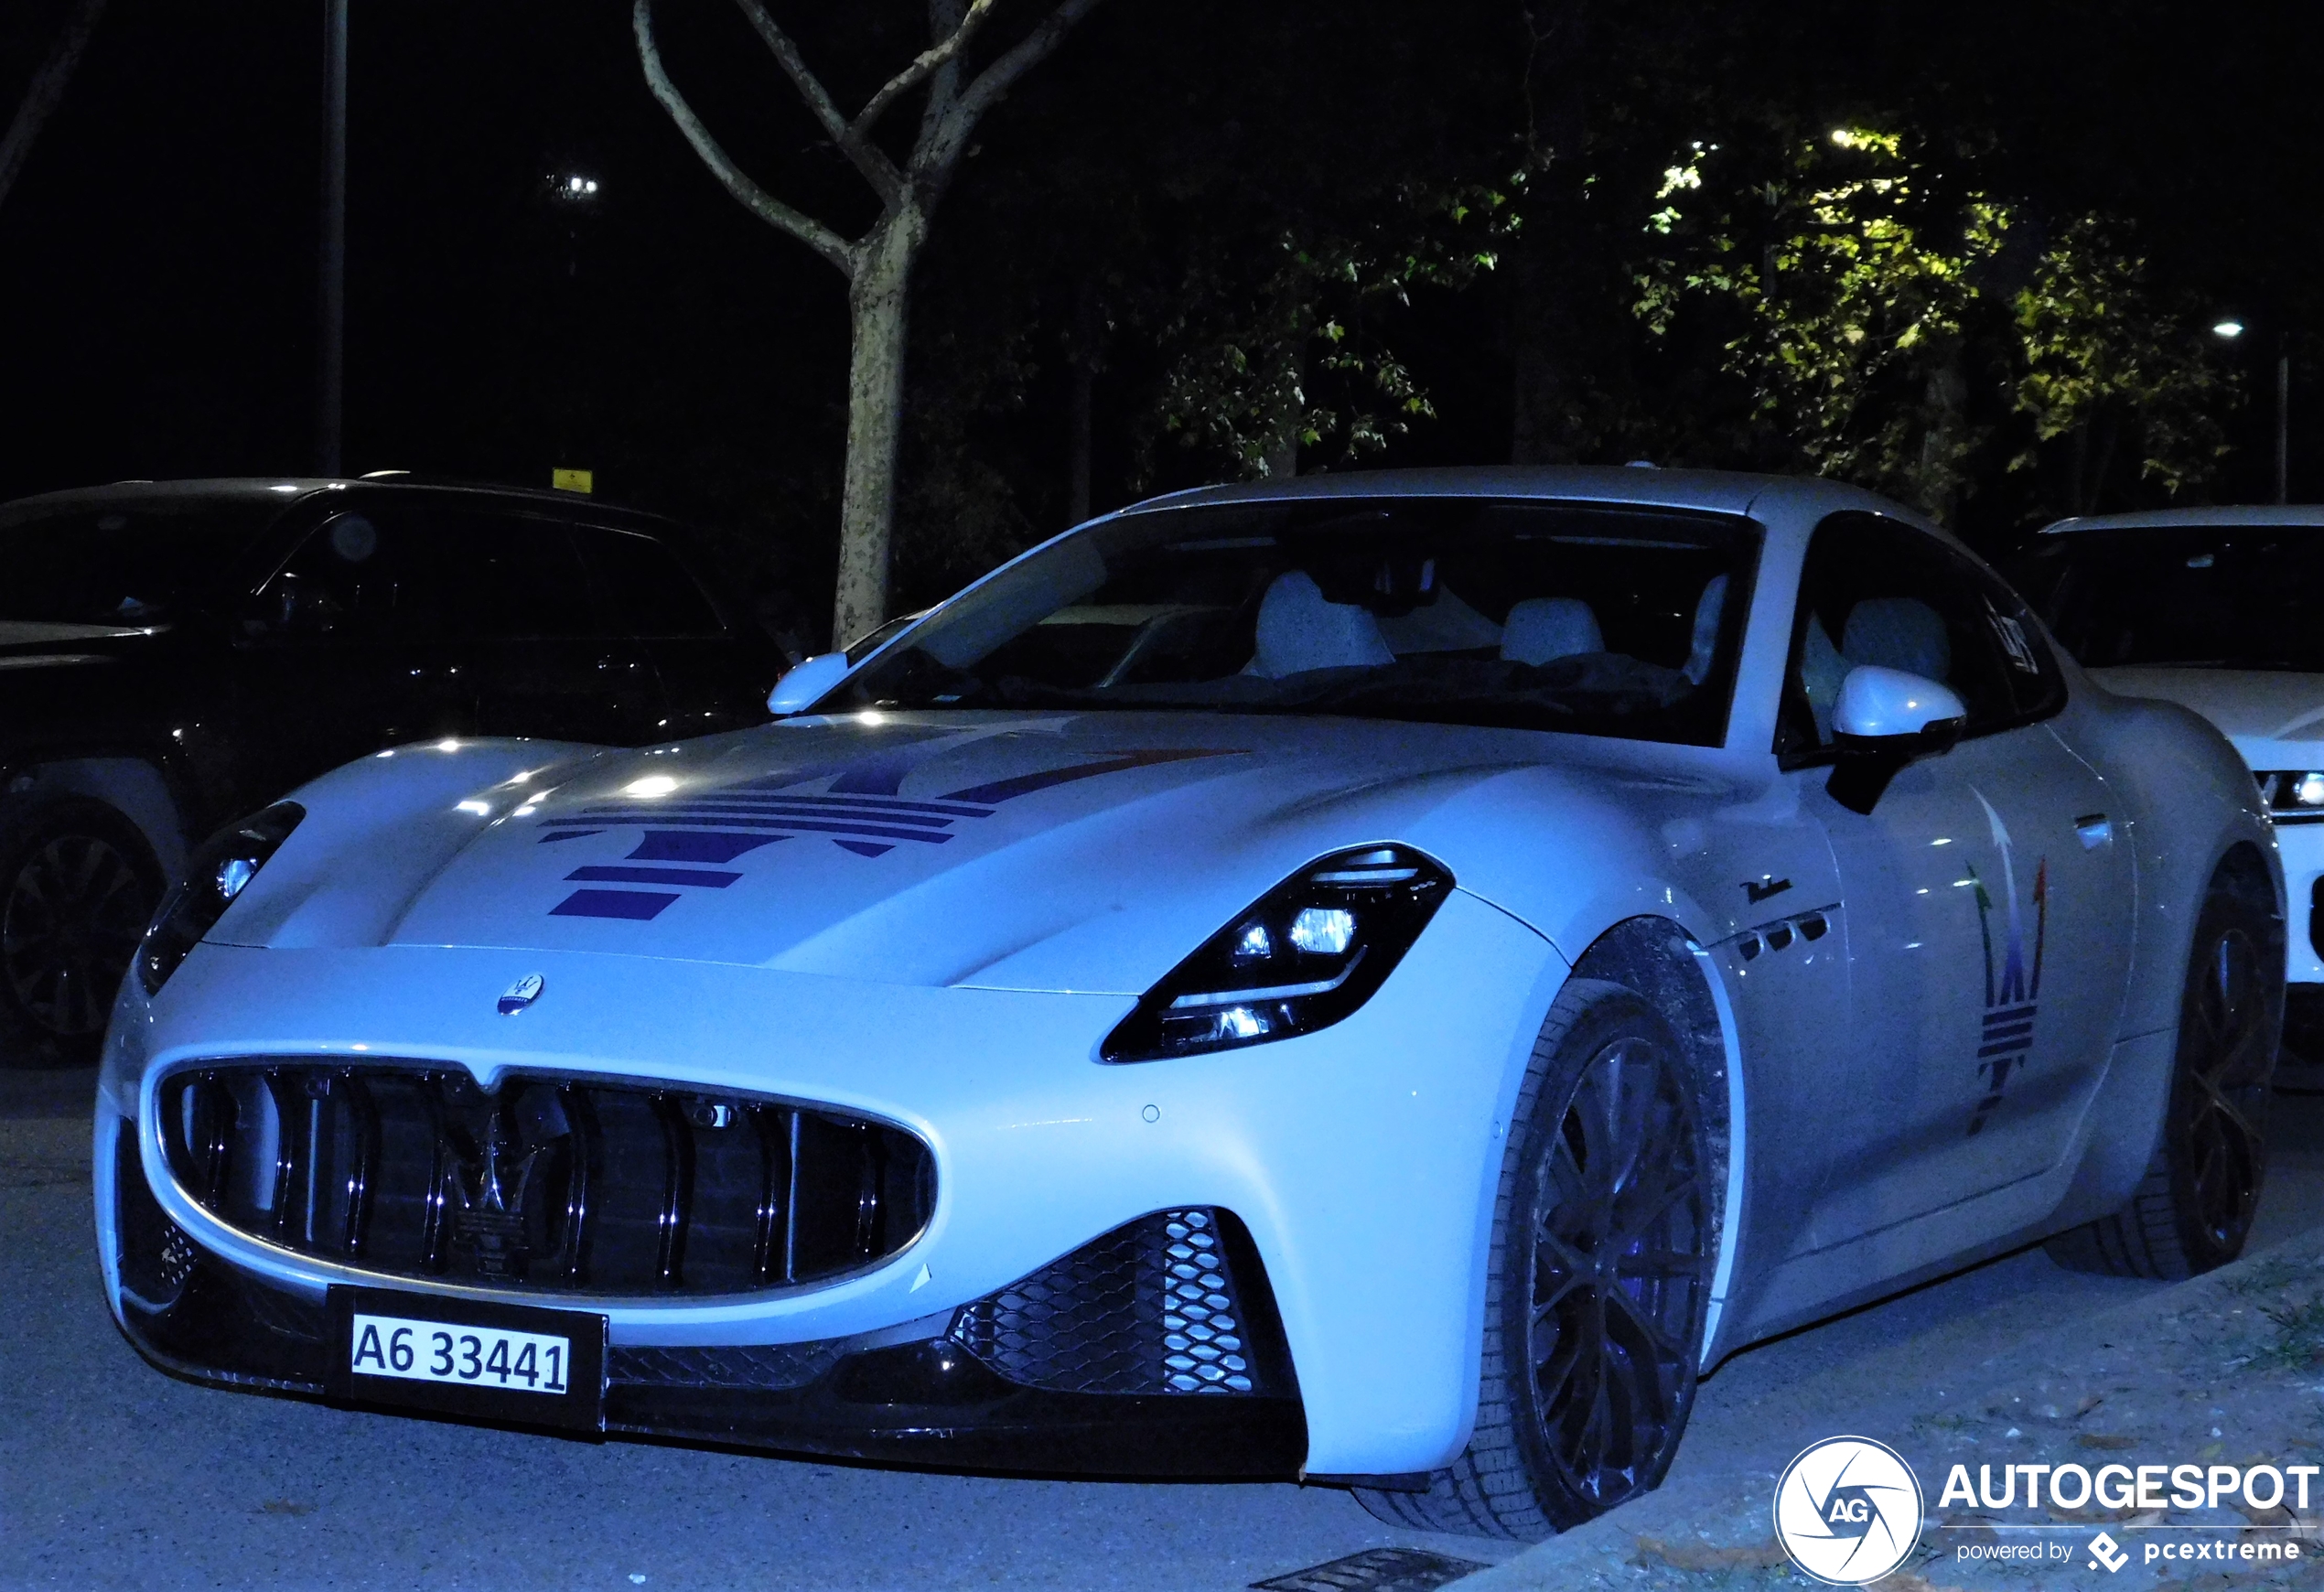 Nachtelijke kiekjes van de nieuwe Maserati GranTurismo